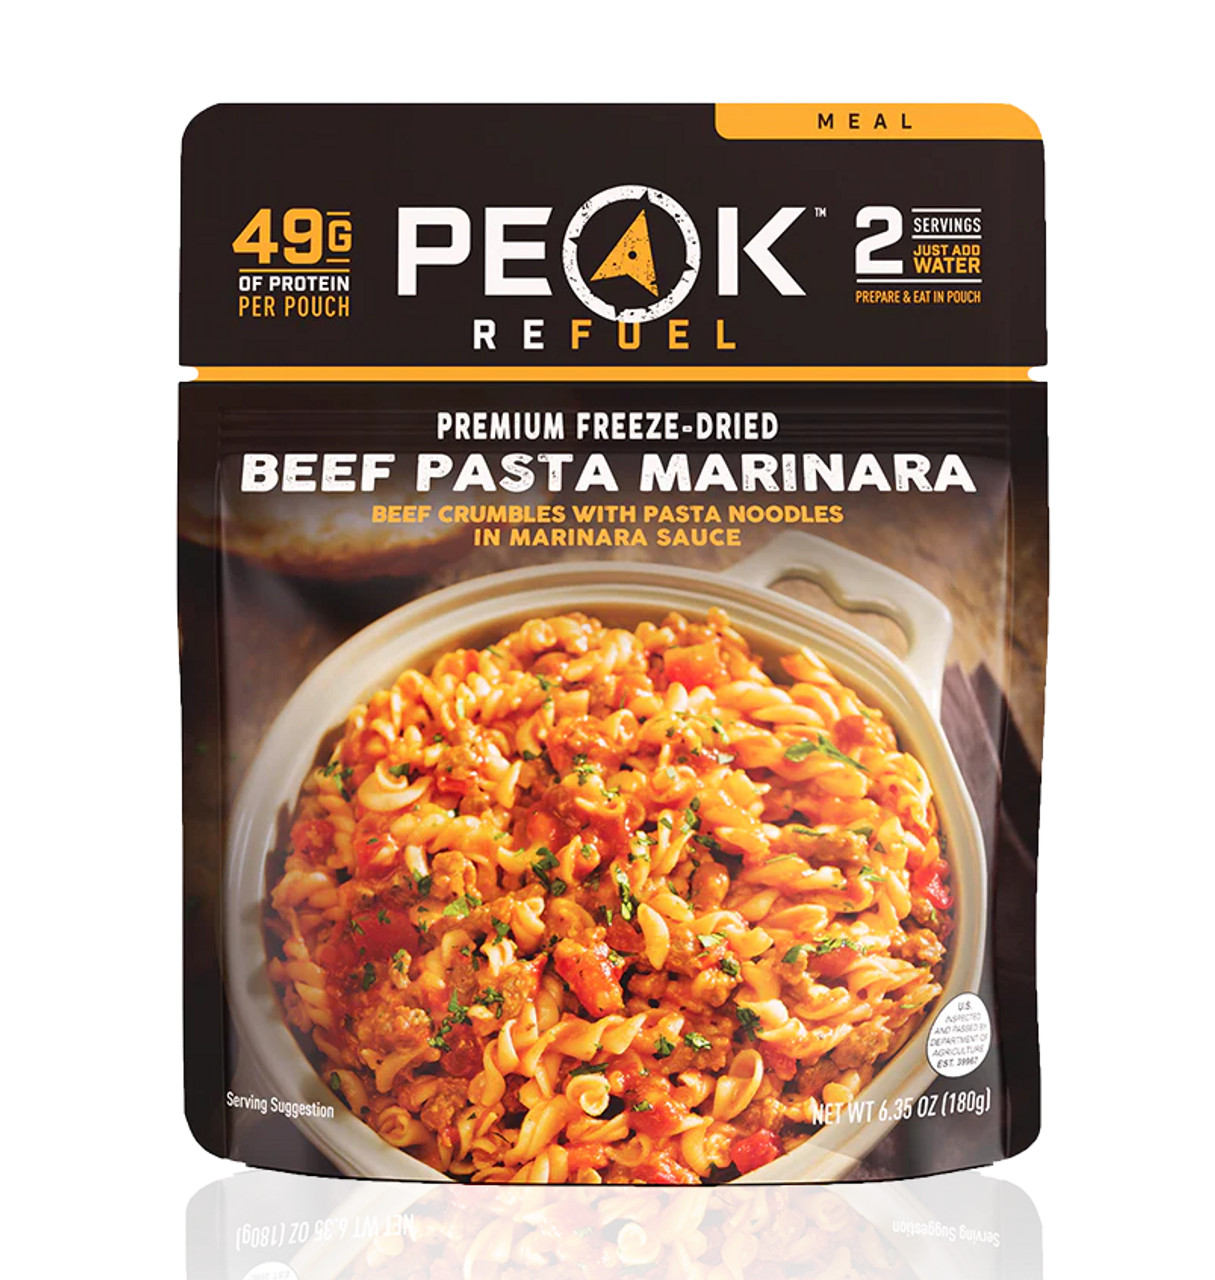  Beef Pasta Marinara freeze-dried meal by Peak Refuel 